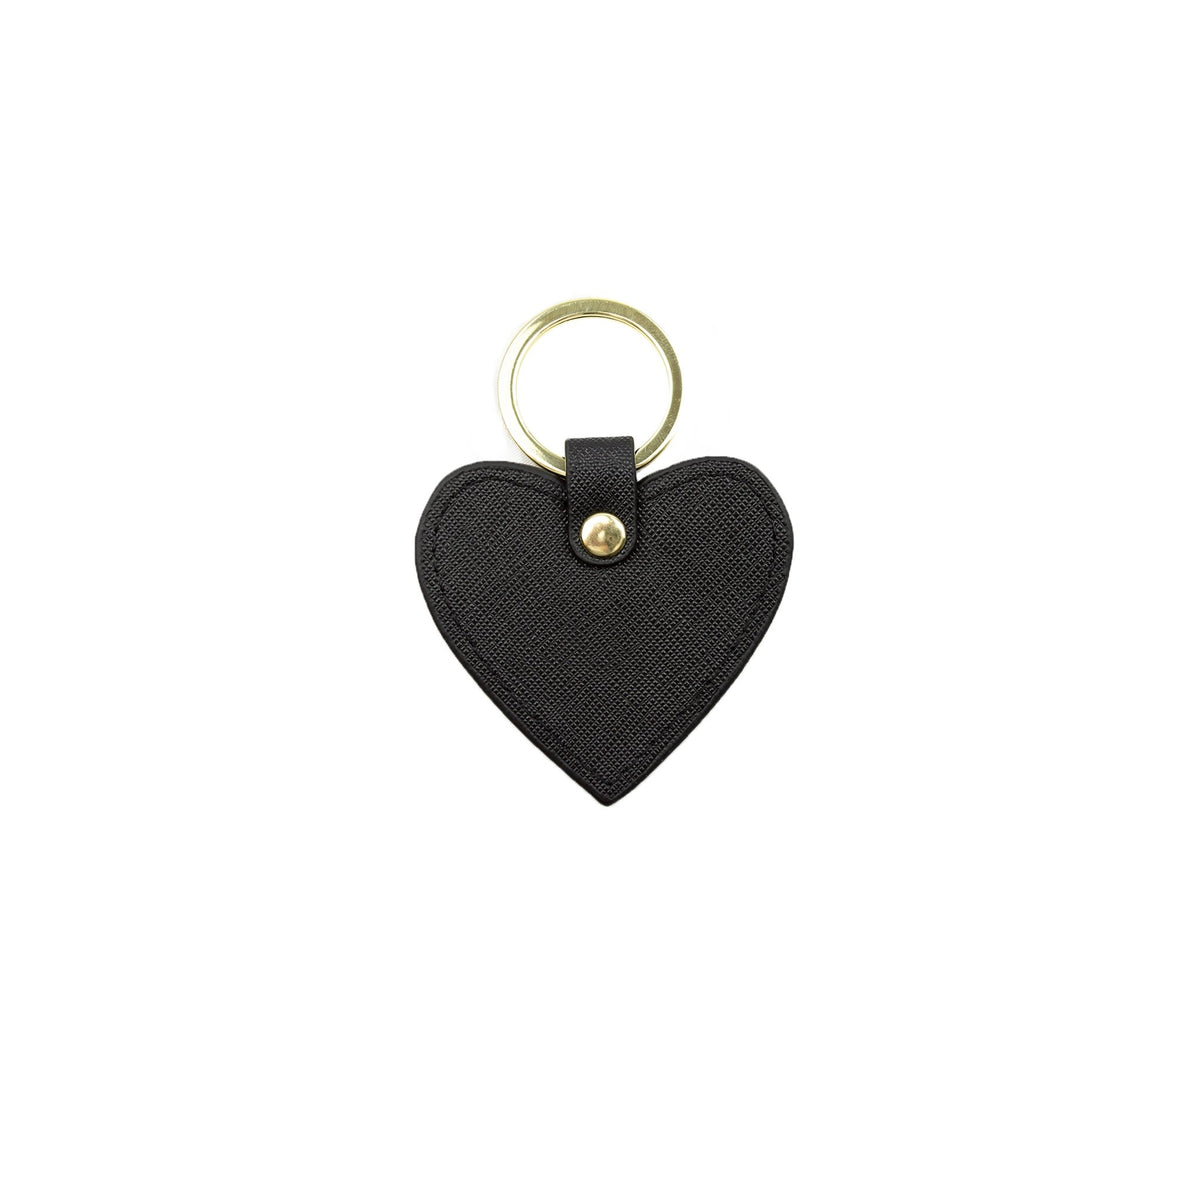 Personalised Heart Keyring - Black Saffiano Leather